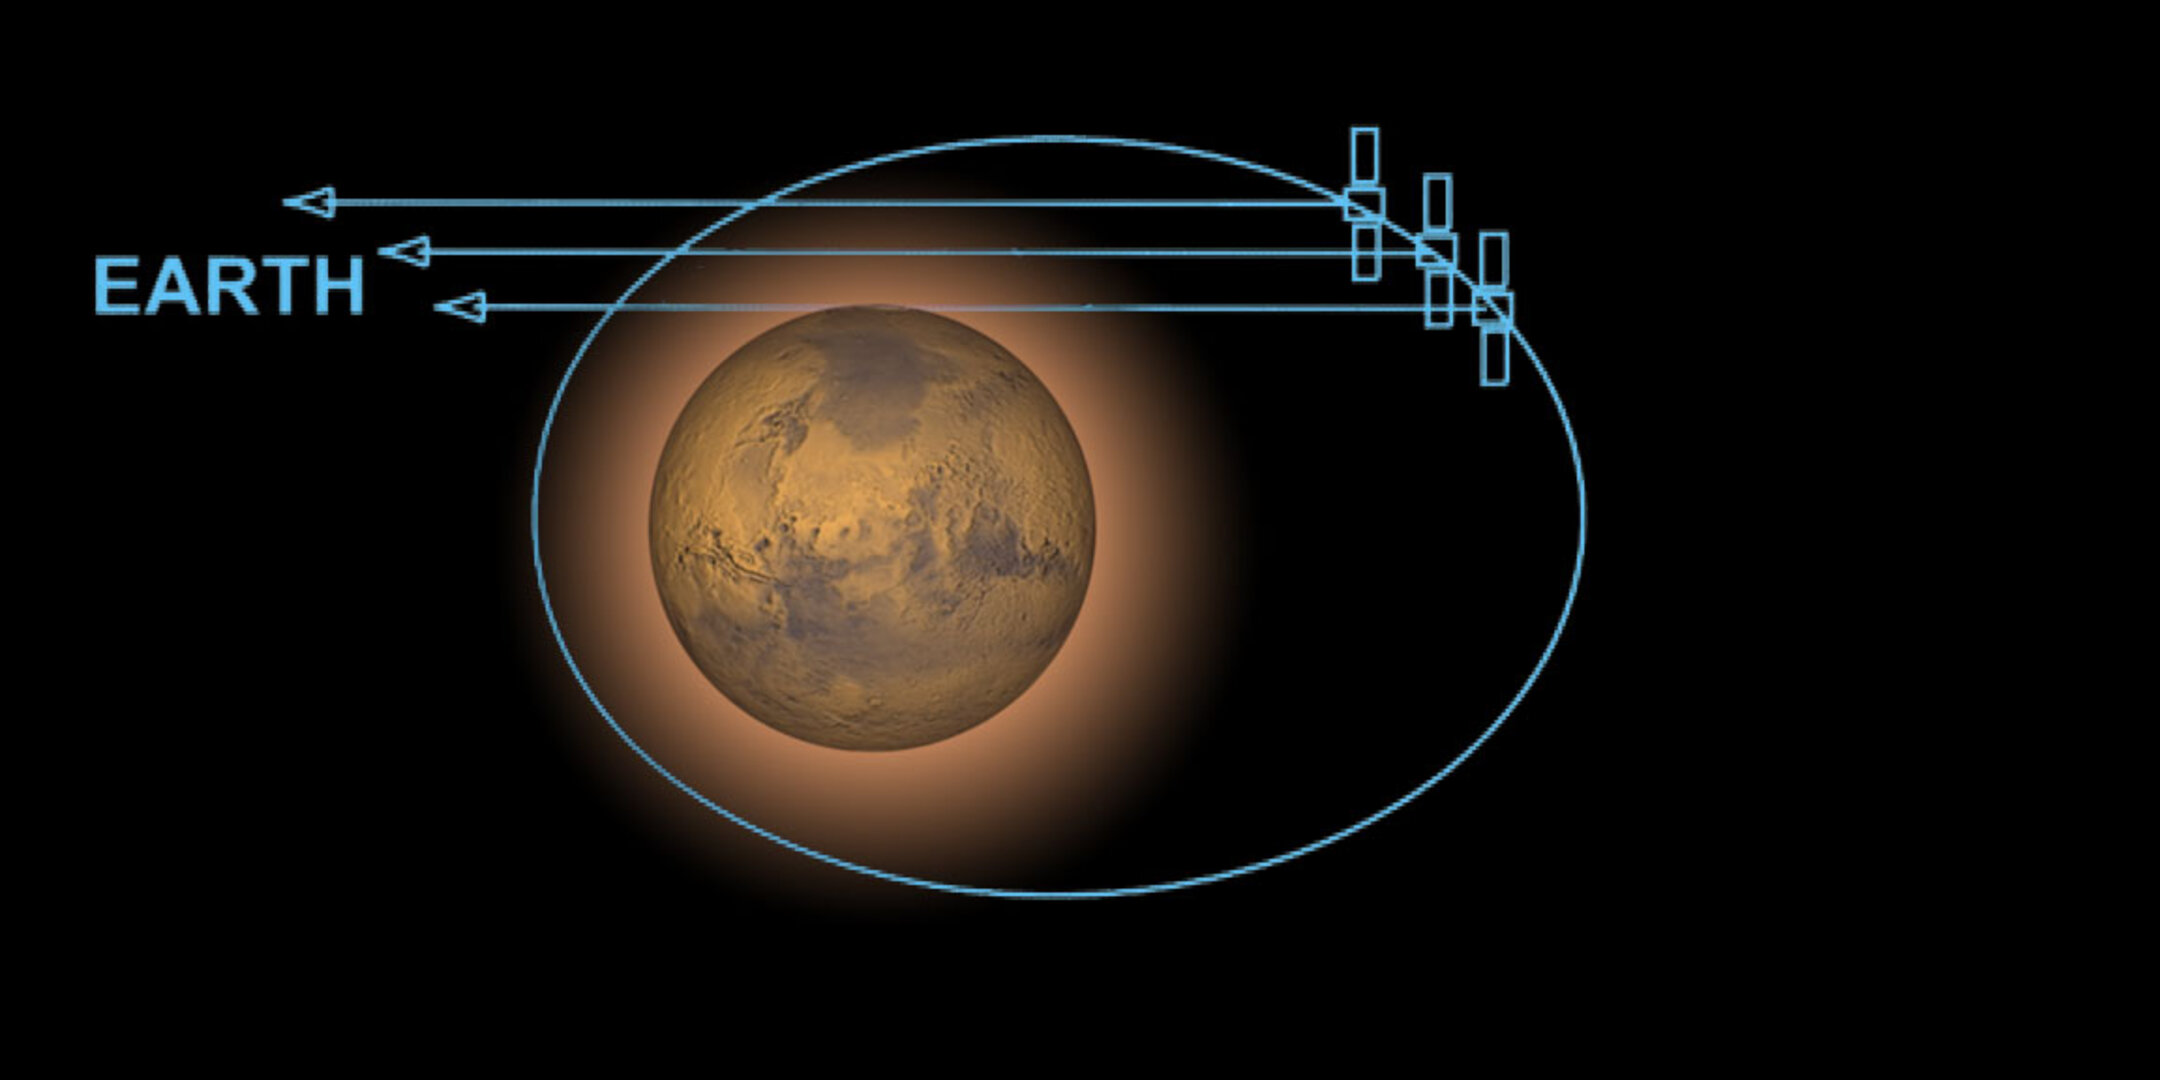 MaRS uses radio signals to probe the ionosphere and atmosphere